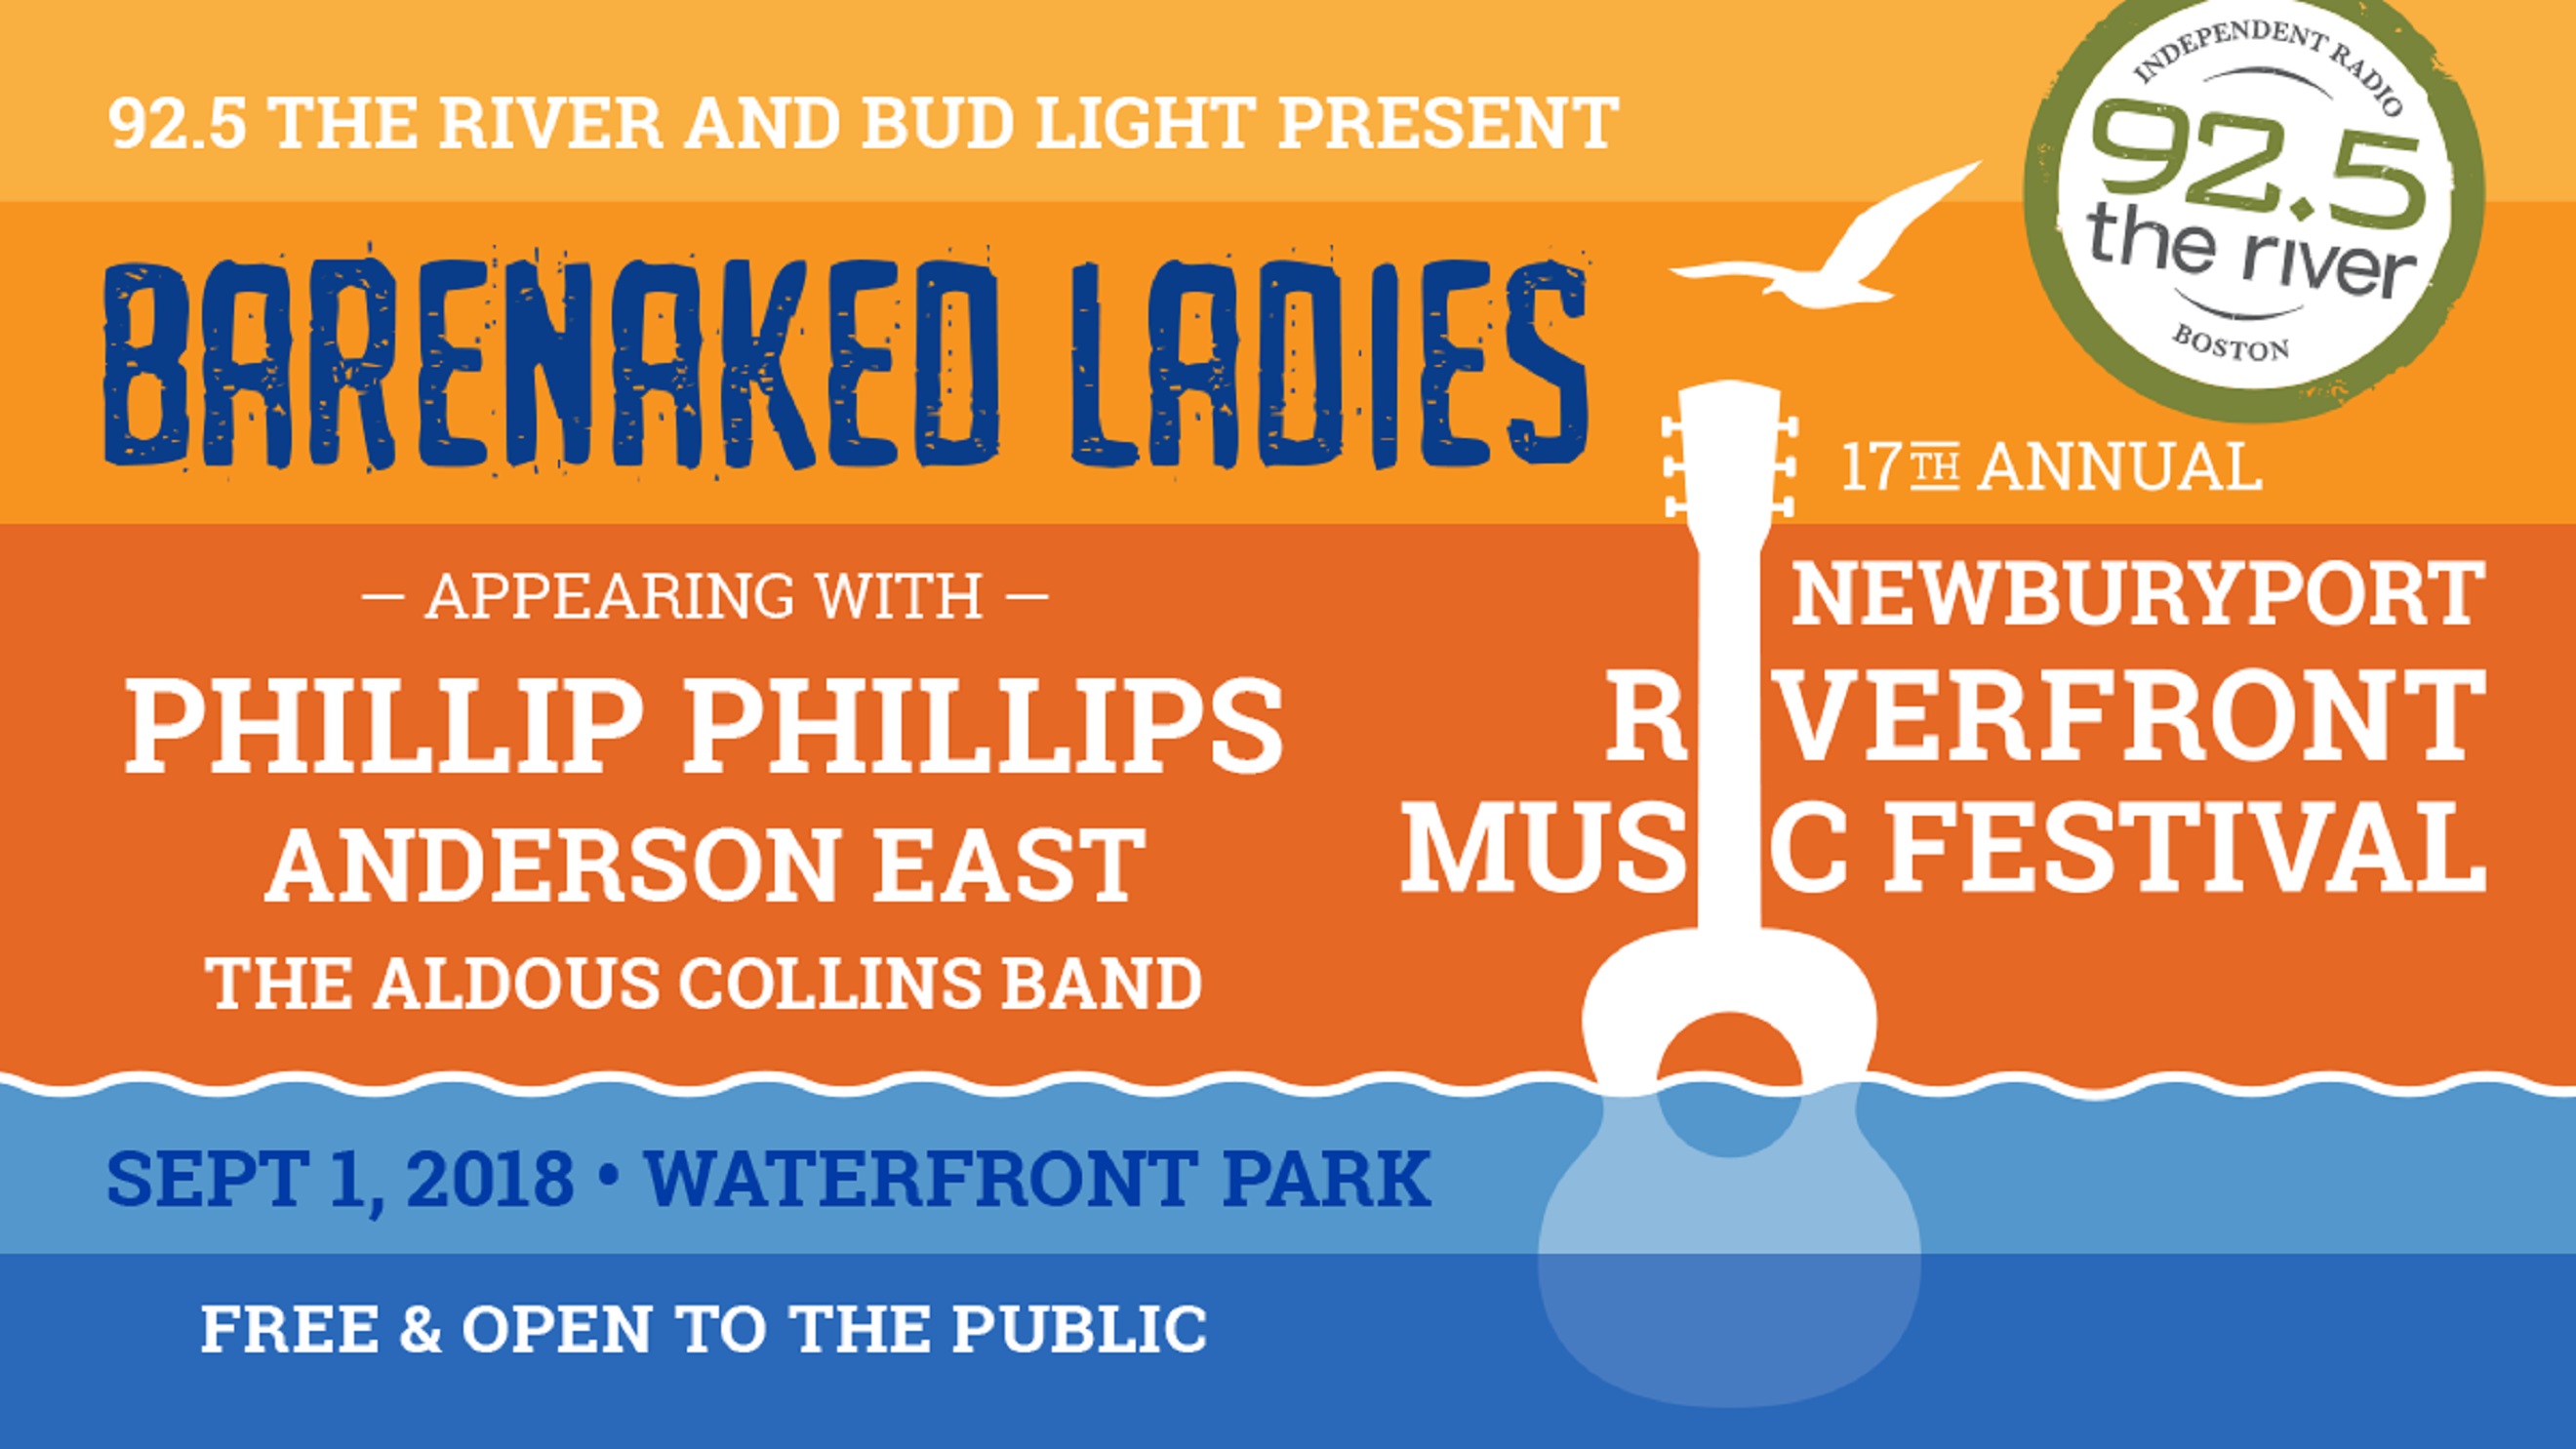 Barenaked Ladies to headline The River’s Free 17th Annual Newburyport Riverfront Music Festival